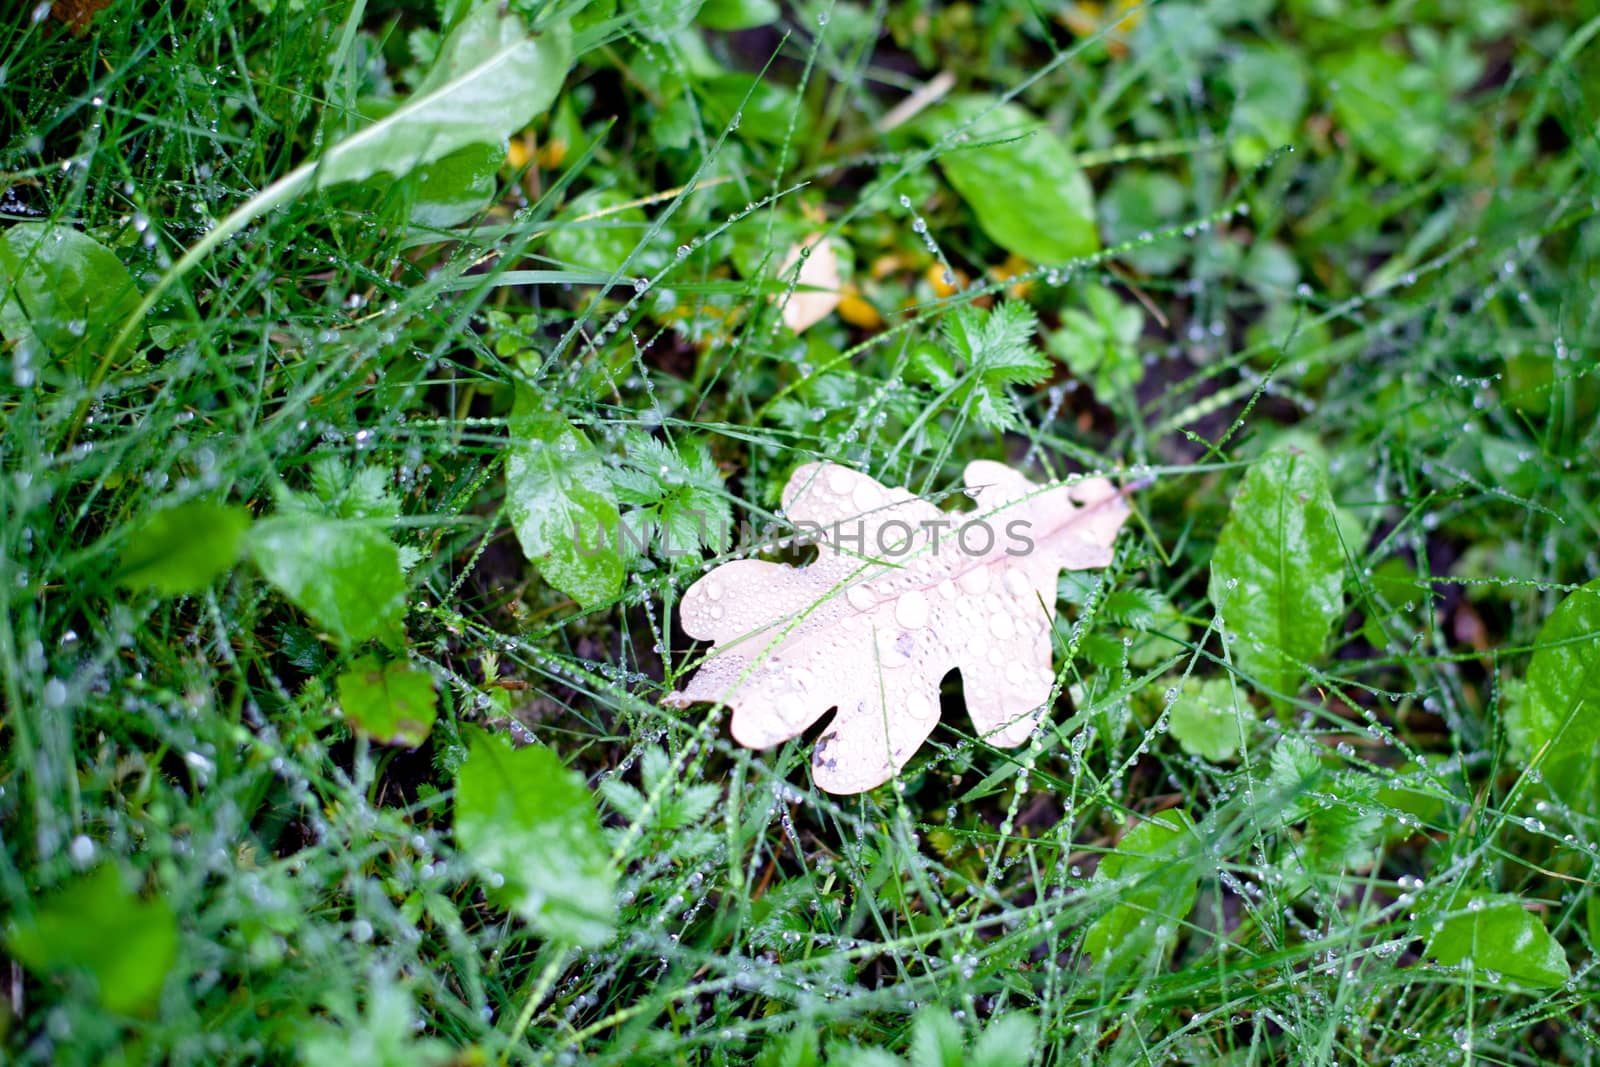 A brown oak leaf in wet green grass
